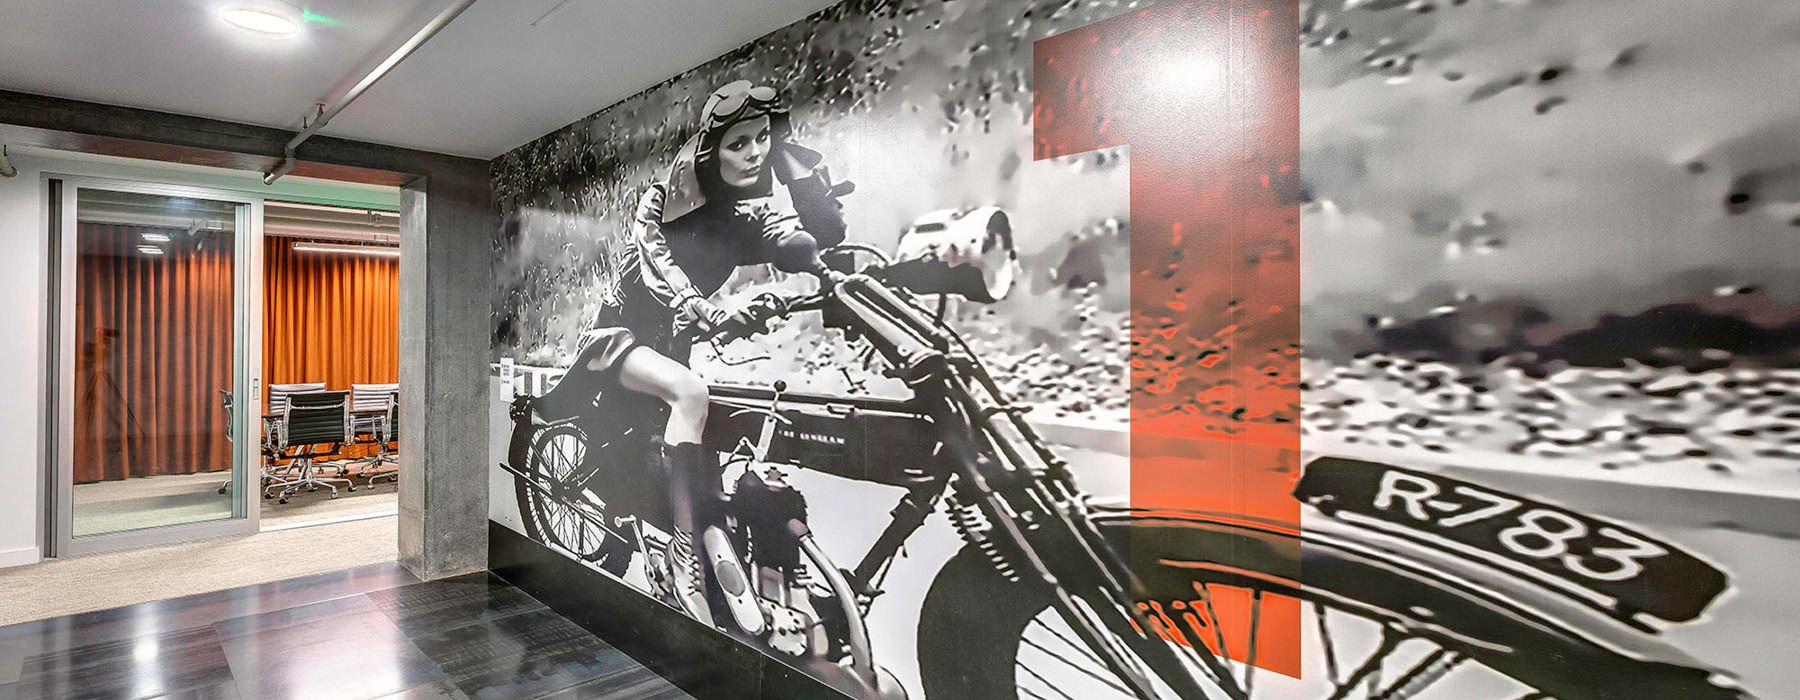 motorcycle photo mural on corridor wall